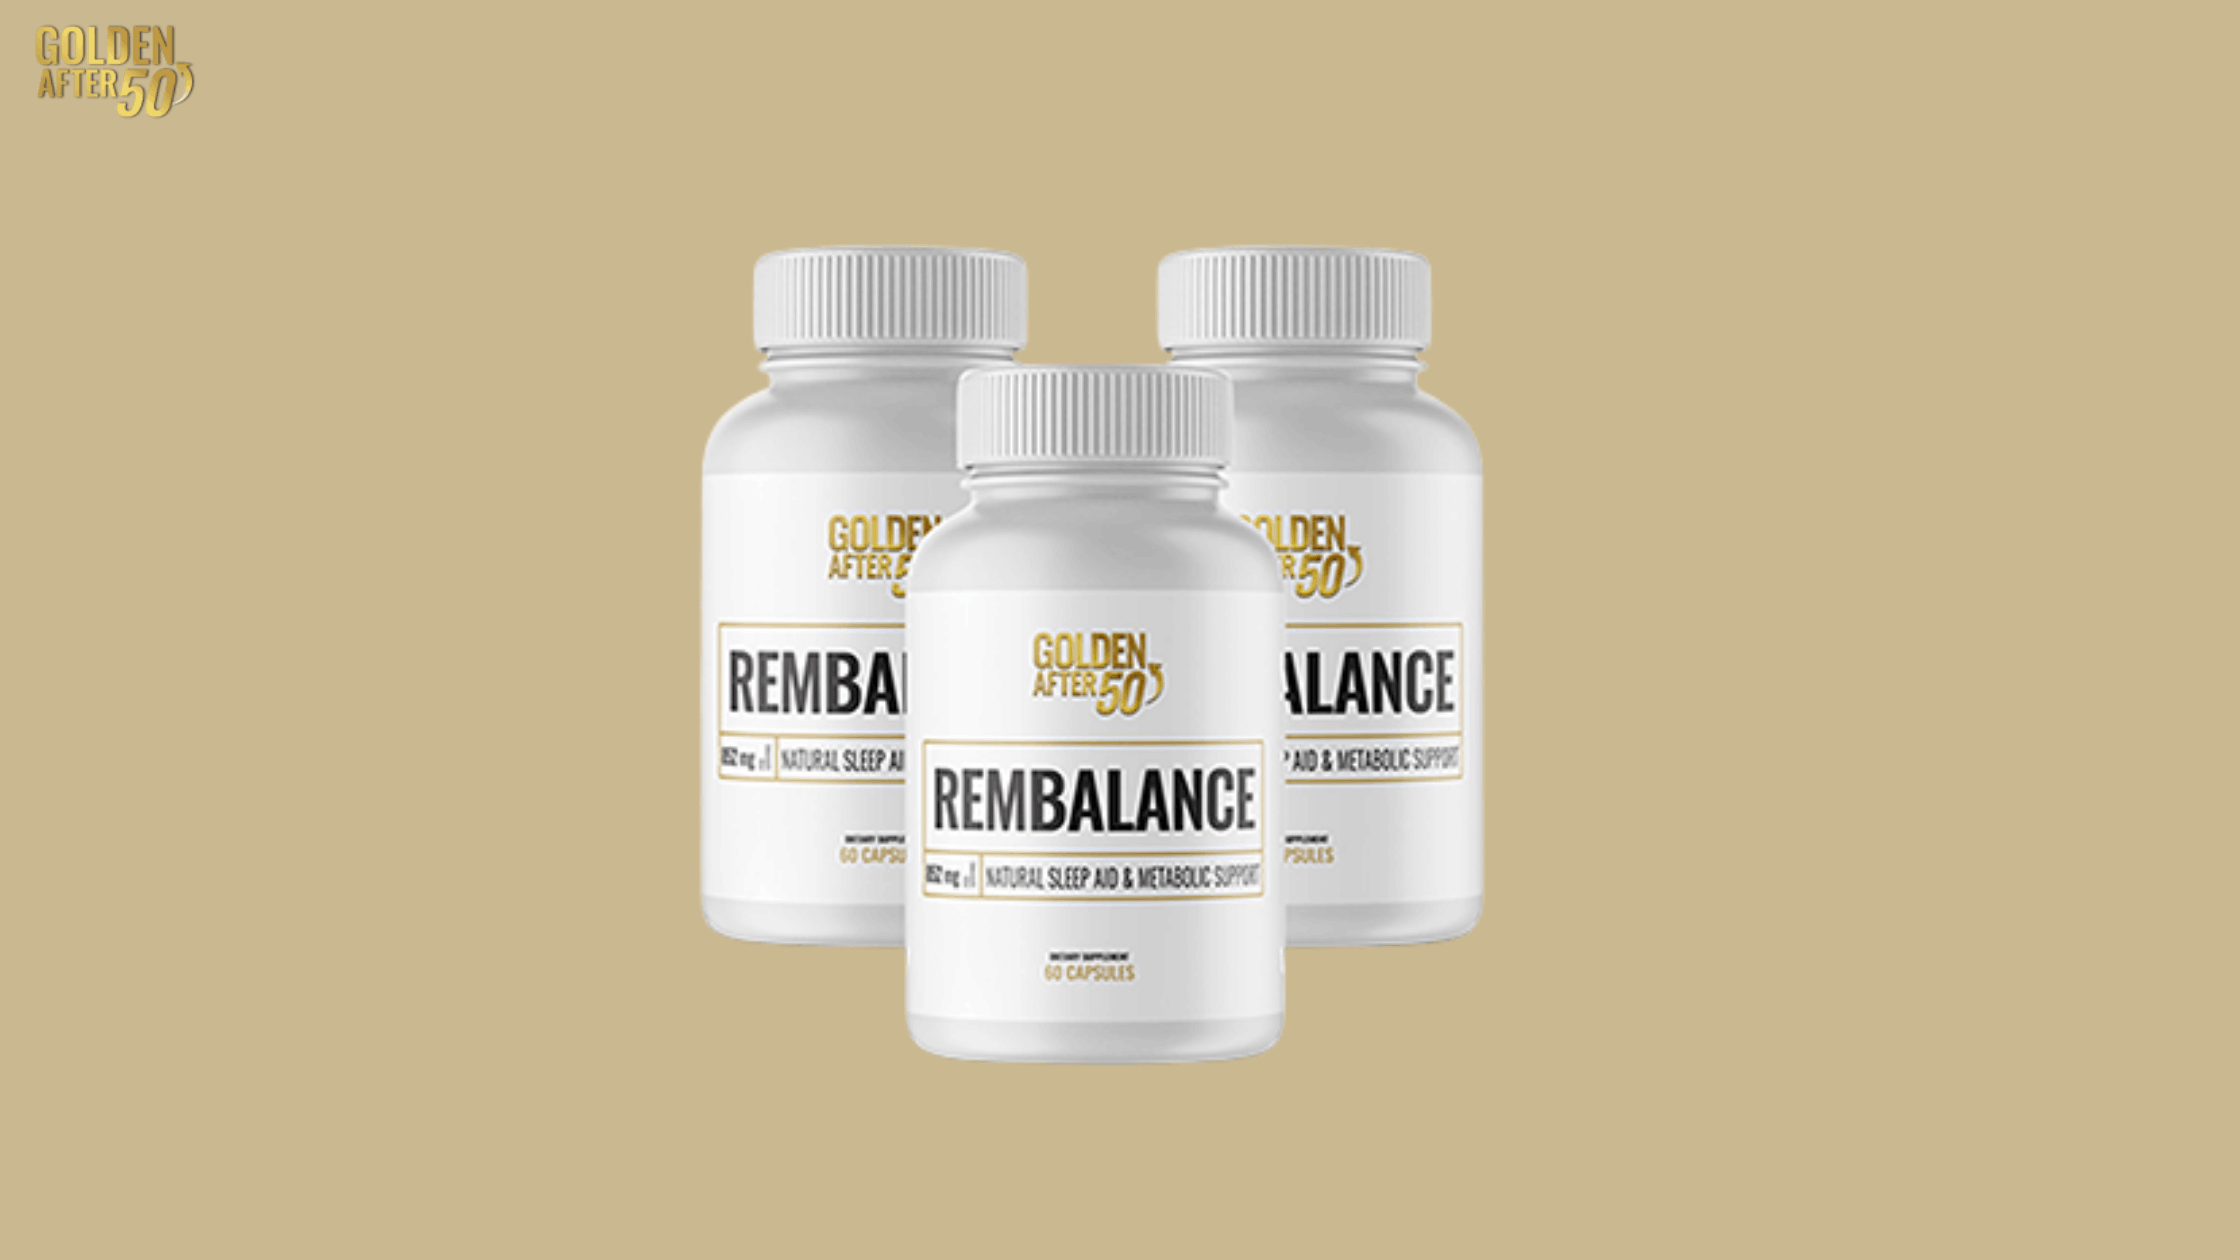 Golden After 50 RemBalance supplement